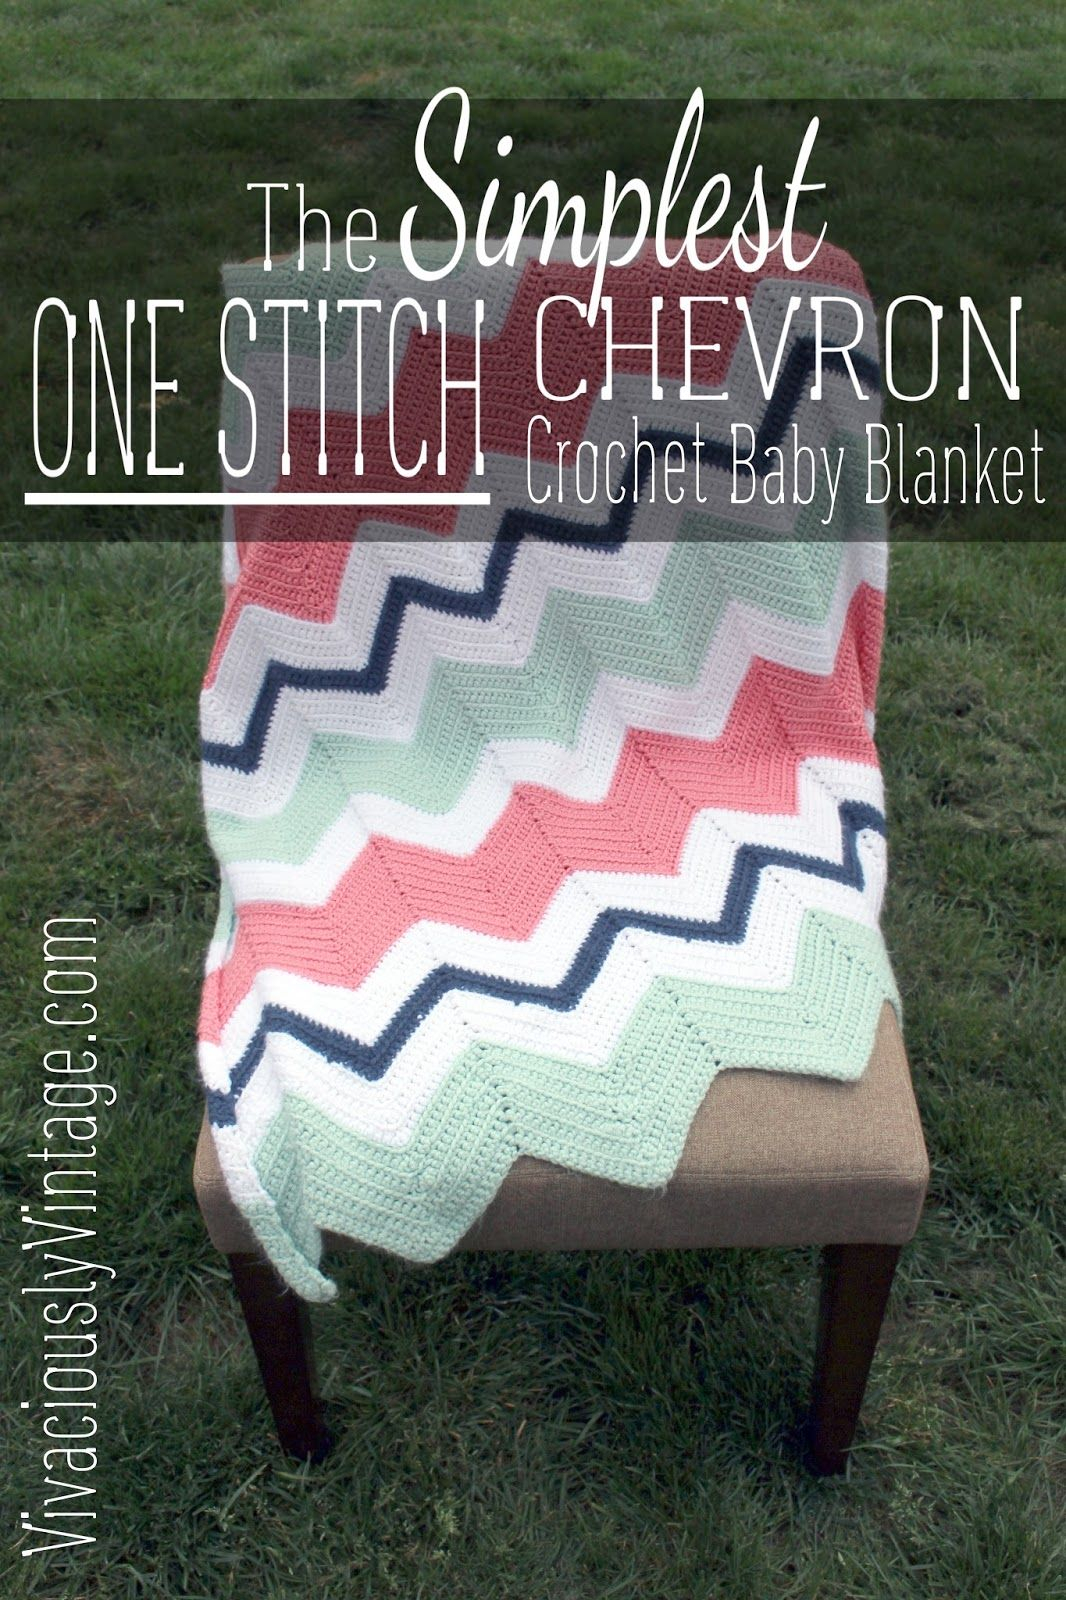 Easy Chevron Crochet Pattern Easy Beginner Chevron Crochet Ba Blanket Only One Stitch To Learn